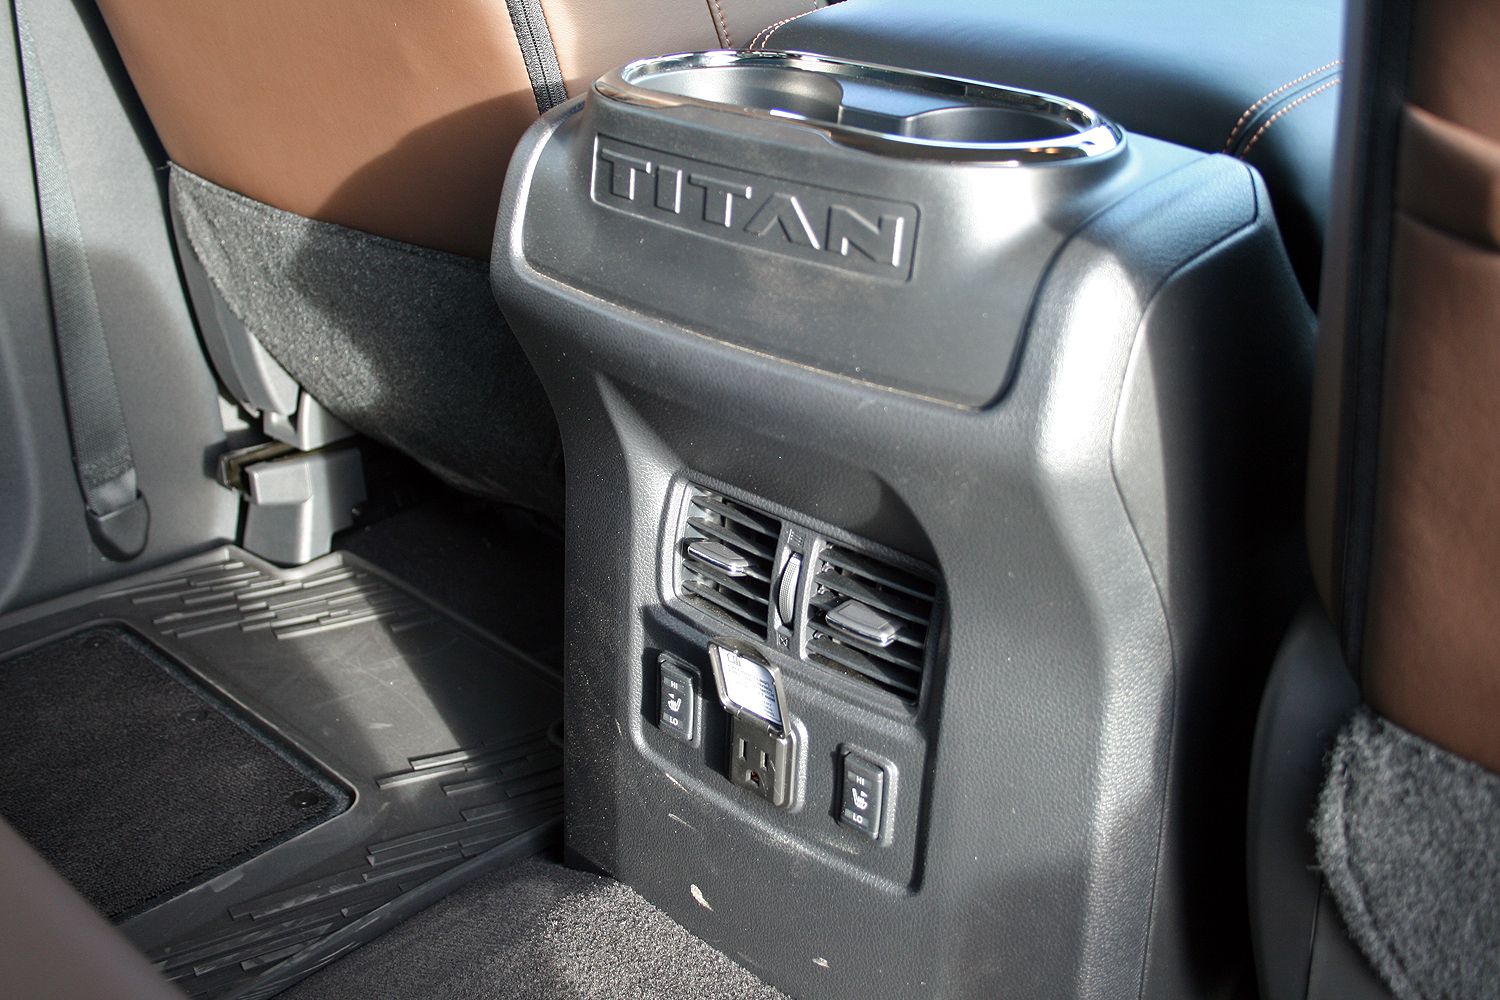 2016 Nissan Titan XD - Driven